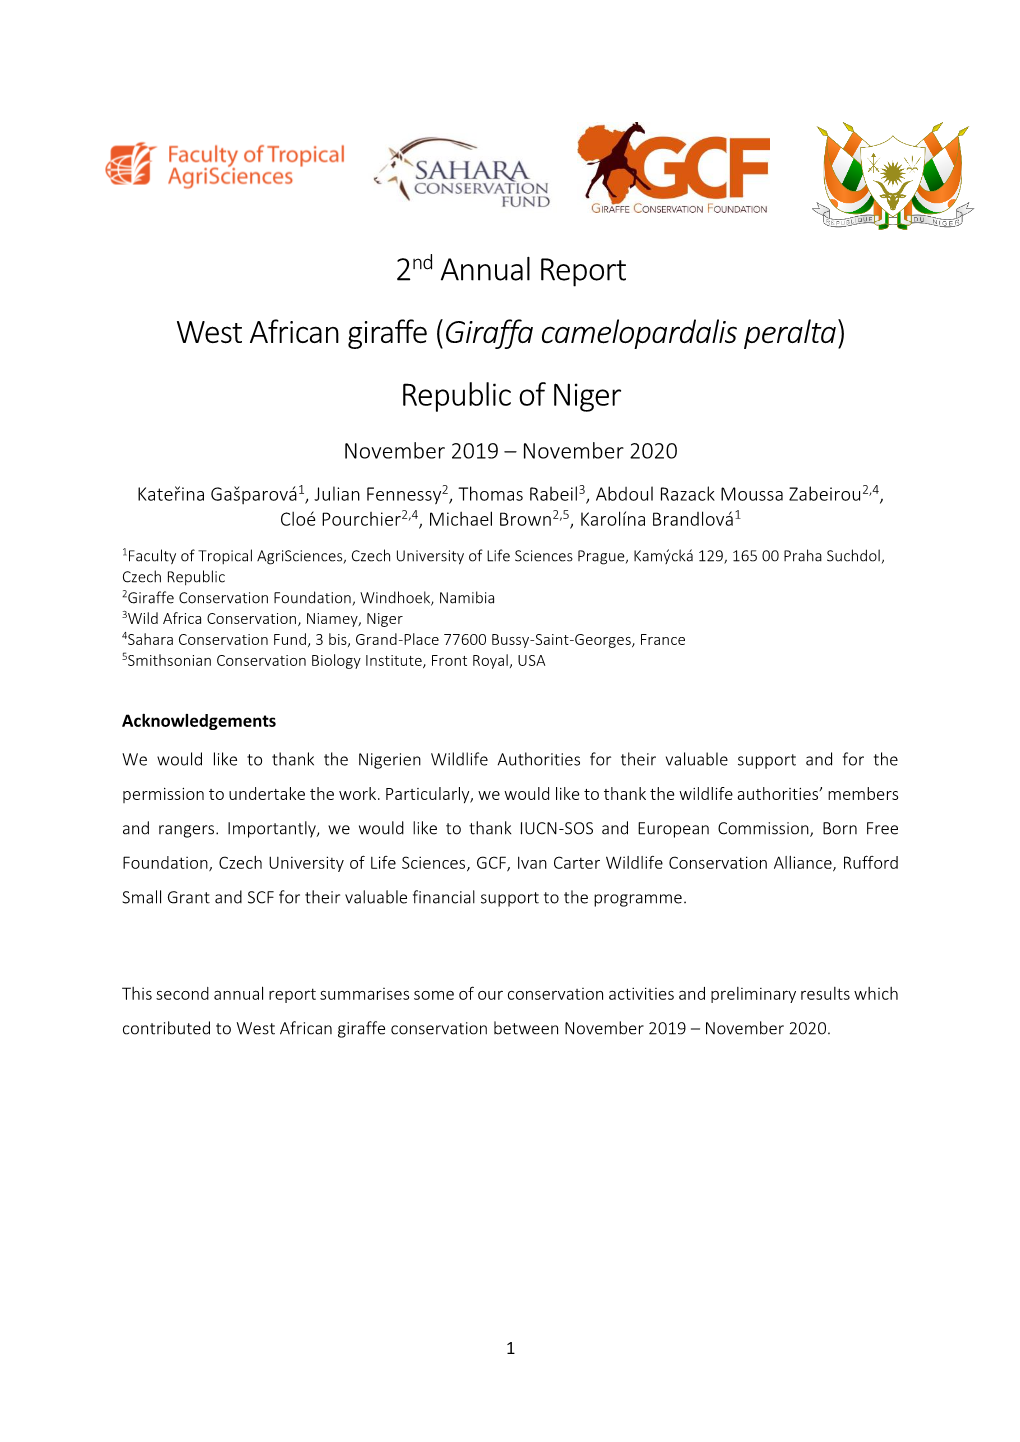 2Nd Annual Report West African Giraffe (Giraffa Camelopardalis Peralta) Republic of Niger